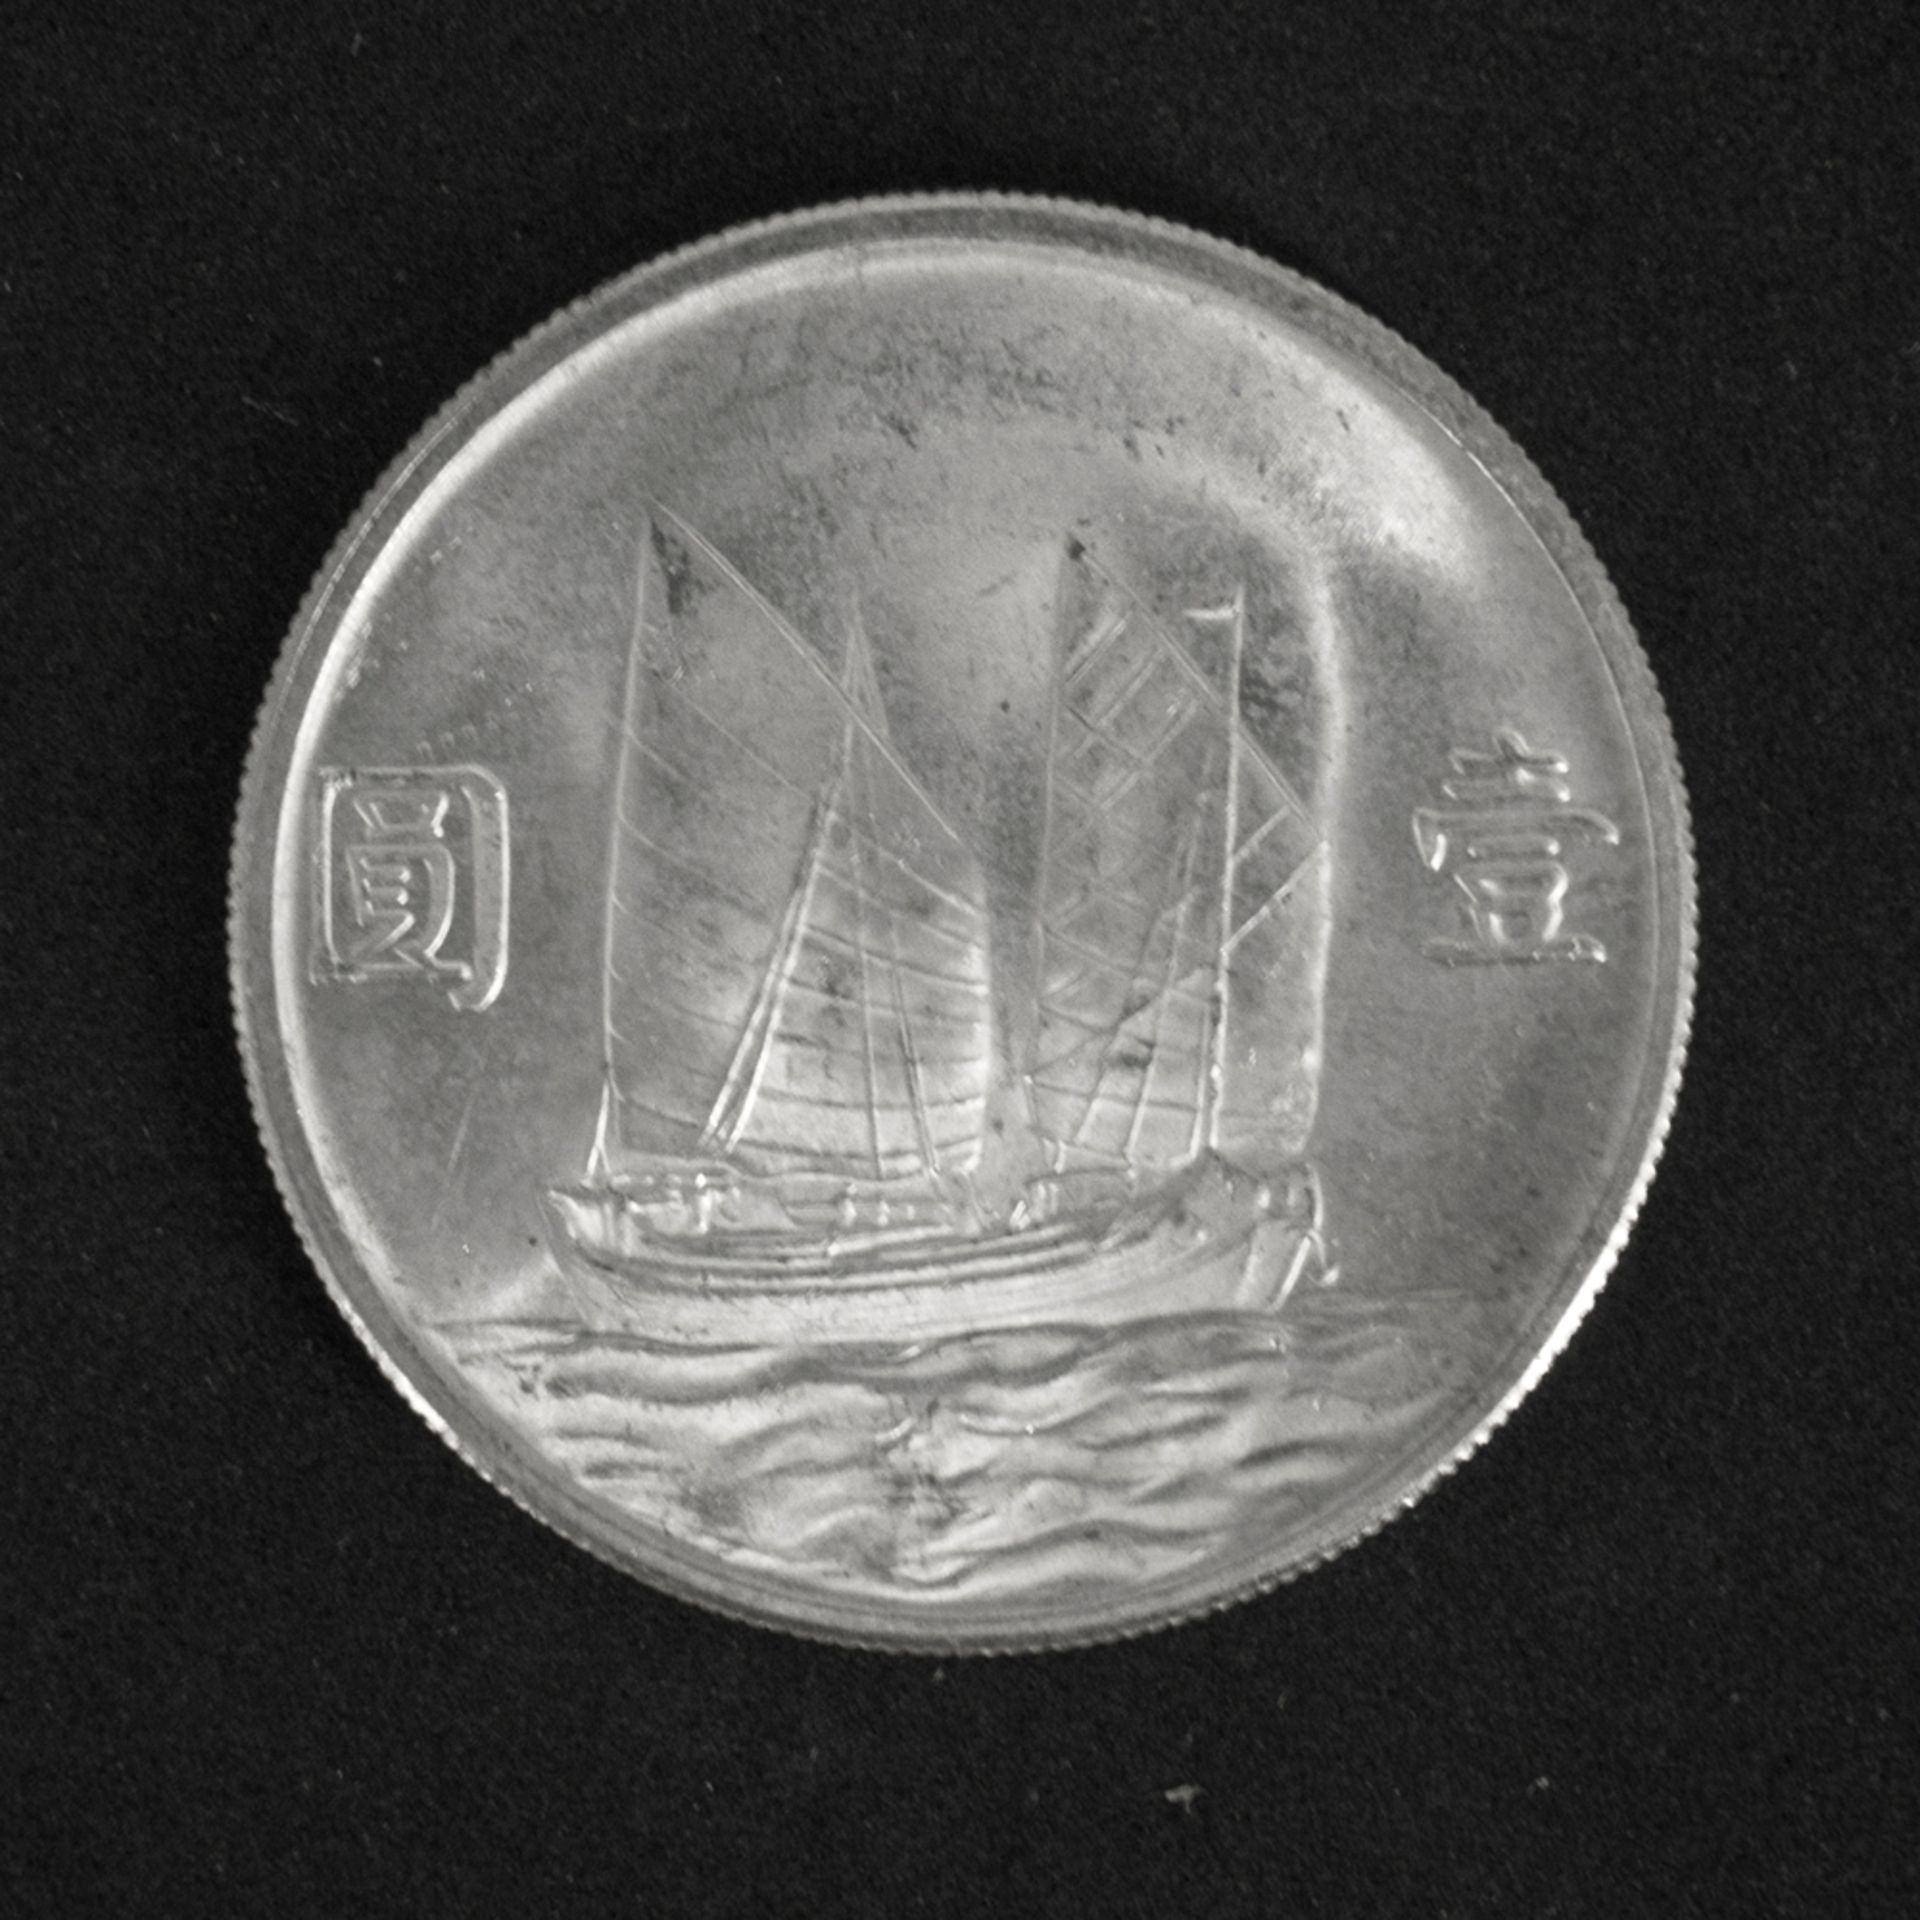 China Republik, 1 Dollar "Dr. Sun Yat Sen - Dschunke". Silber. Erhaltung: vz. - Bild 2 aus 2